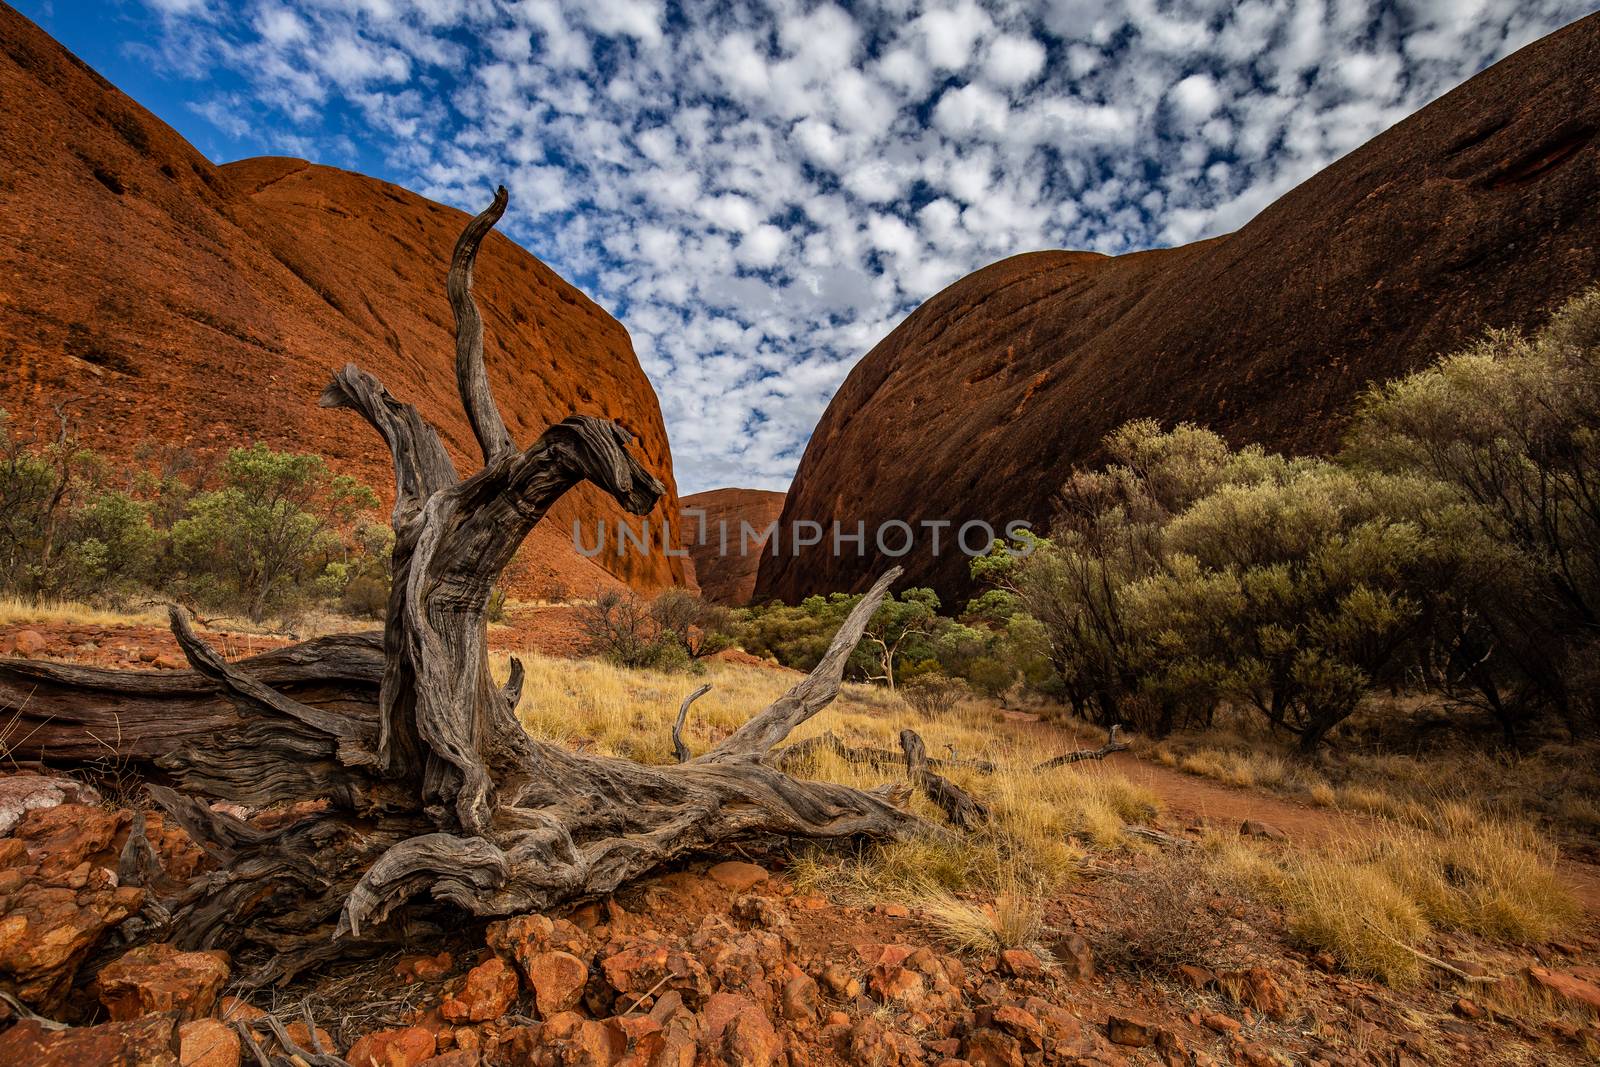 tree roots in Kata Tjuta National Park in Australia desert outbacks by mkenwoo